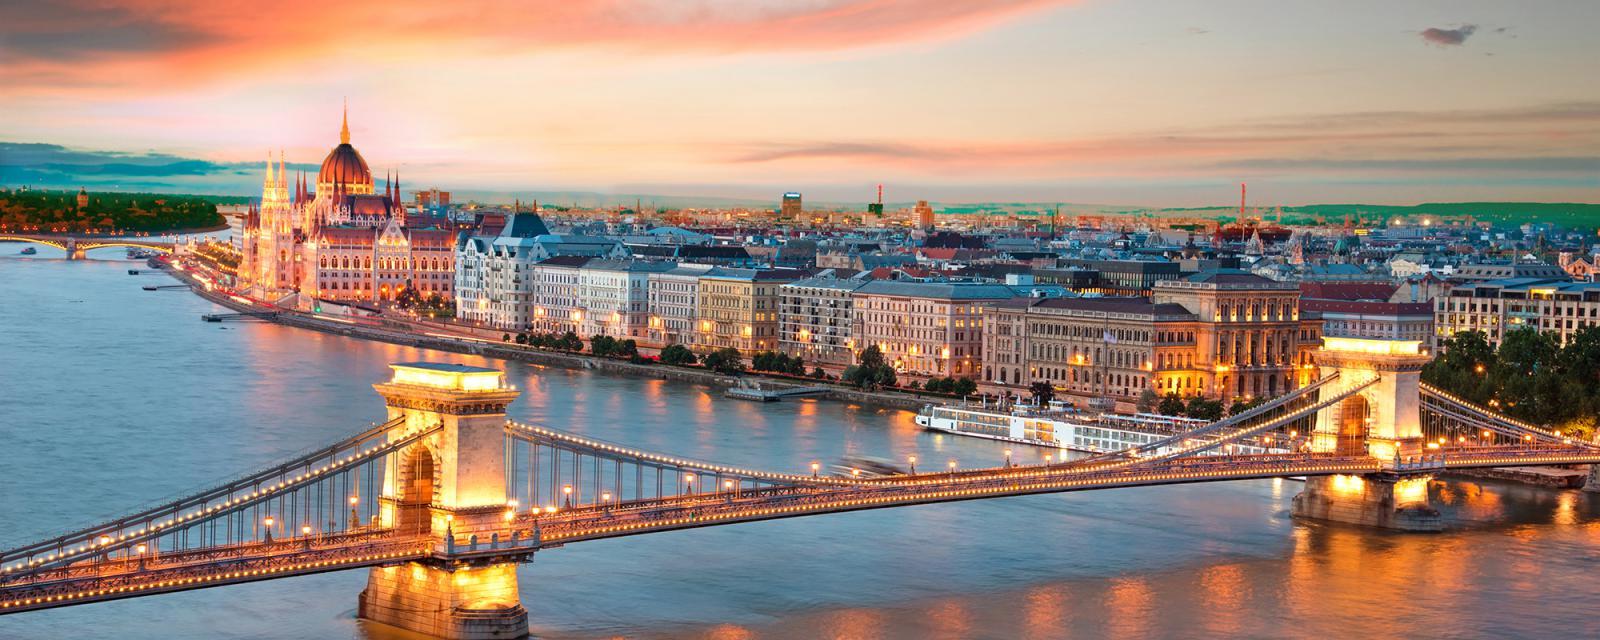 Gezapt: Budapest | Inspiratie voor jouw stedentrip 